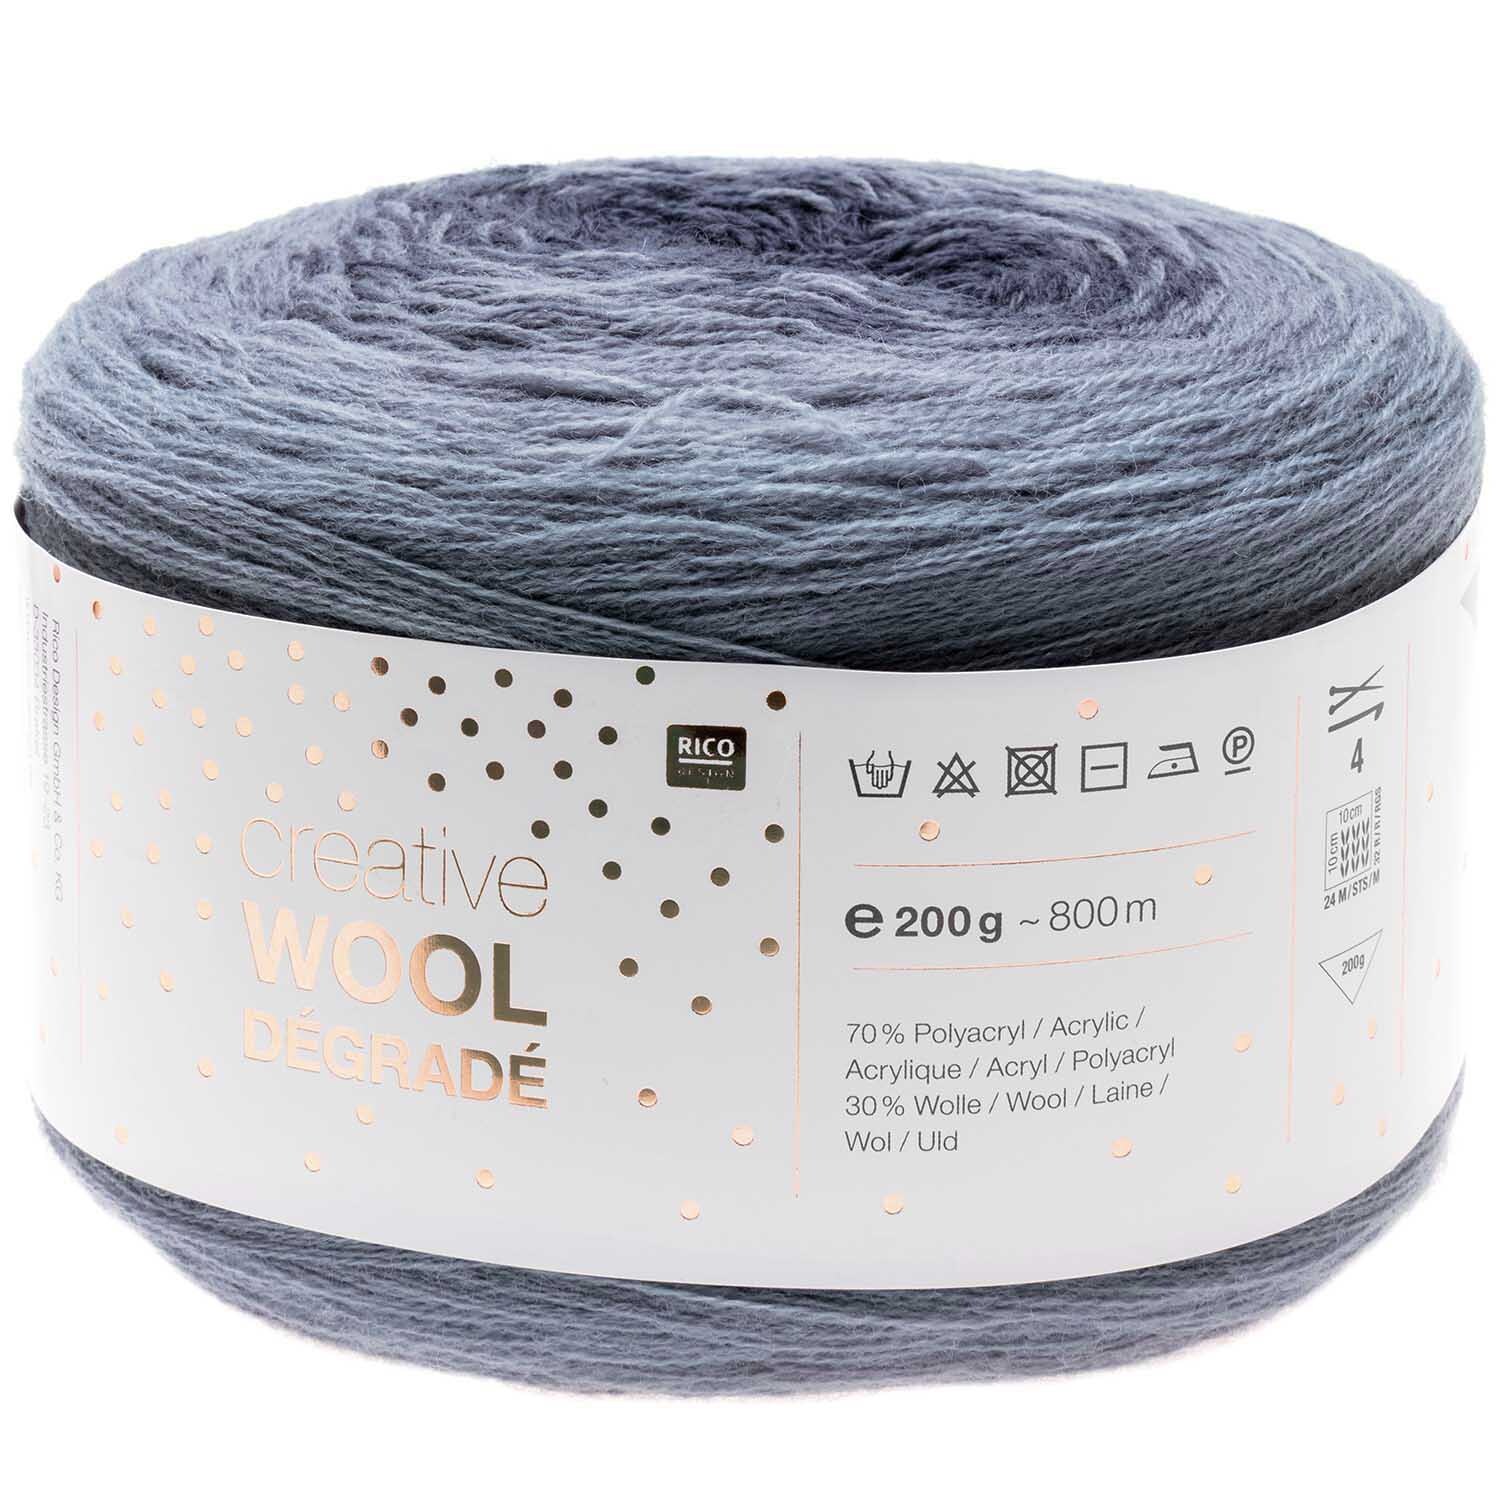 Creative Wool dégradé